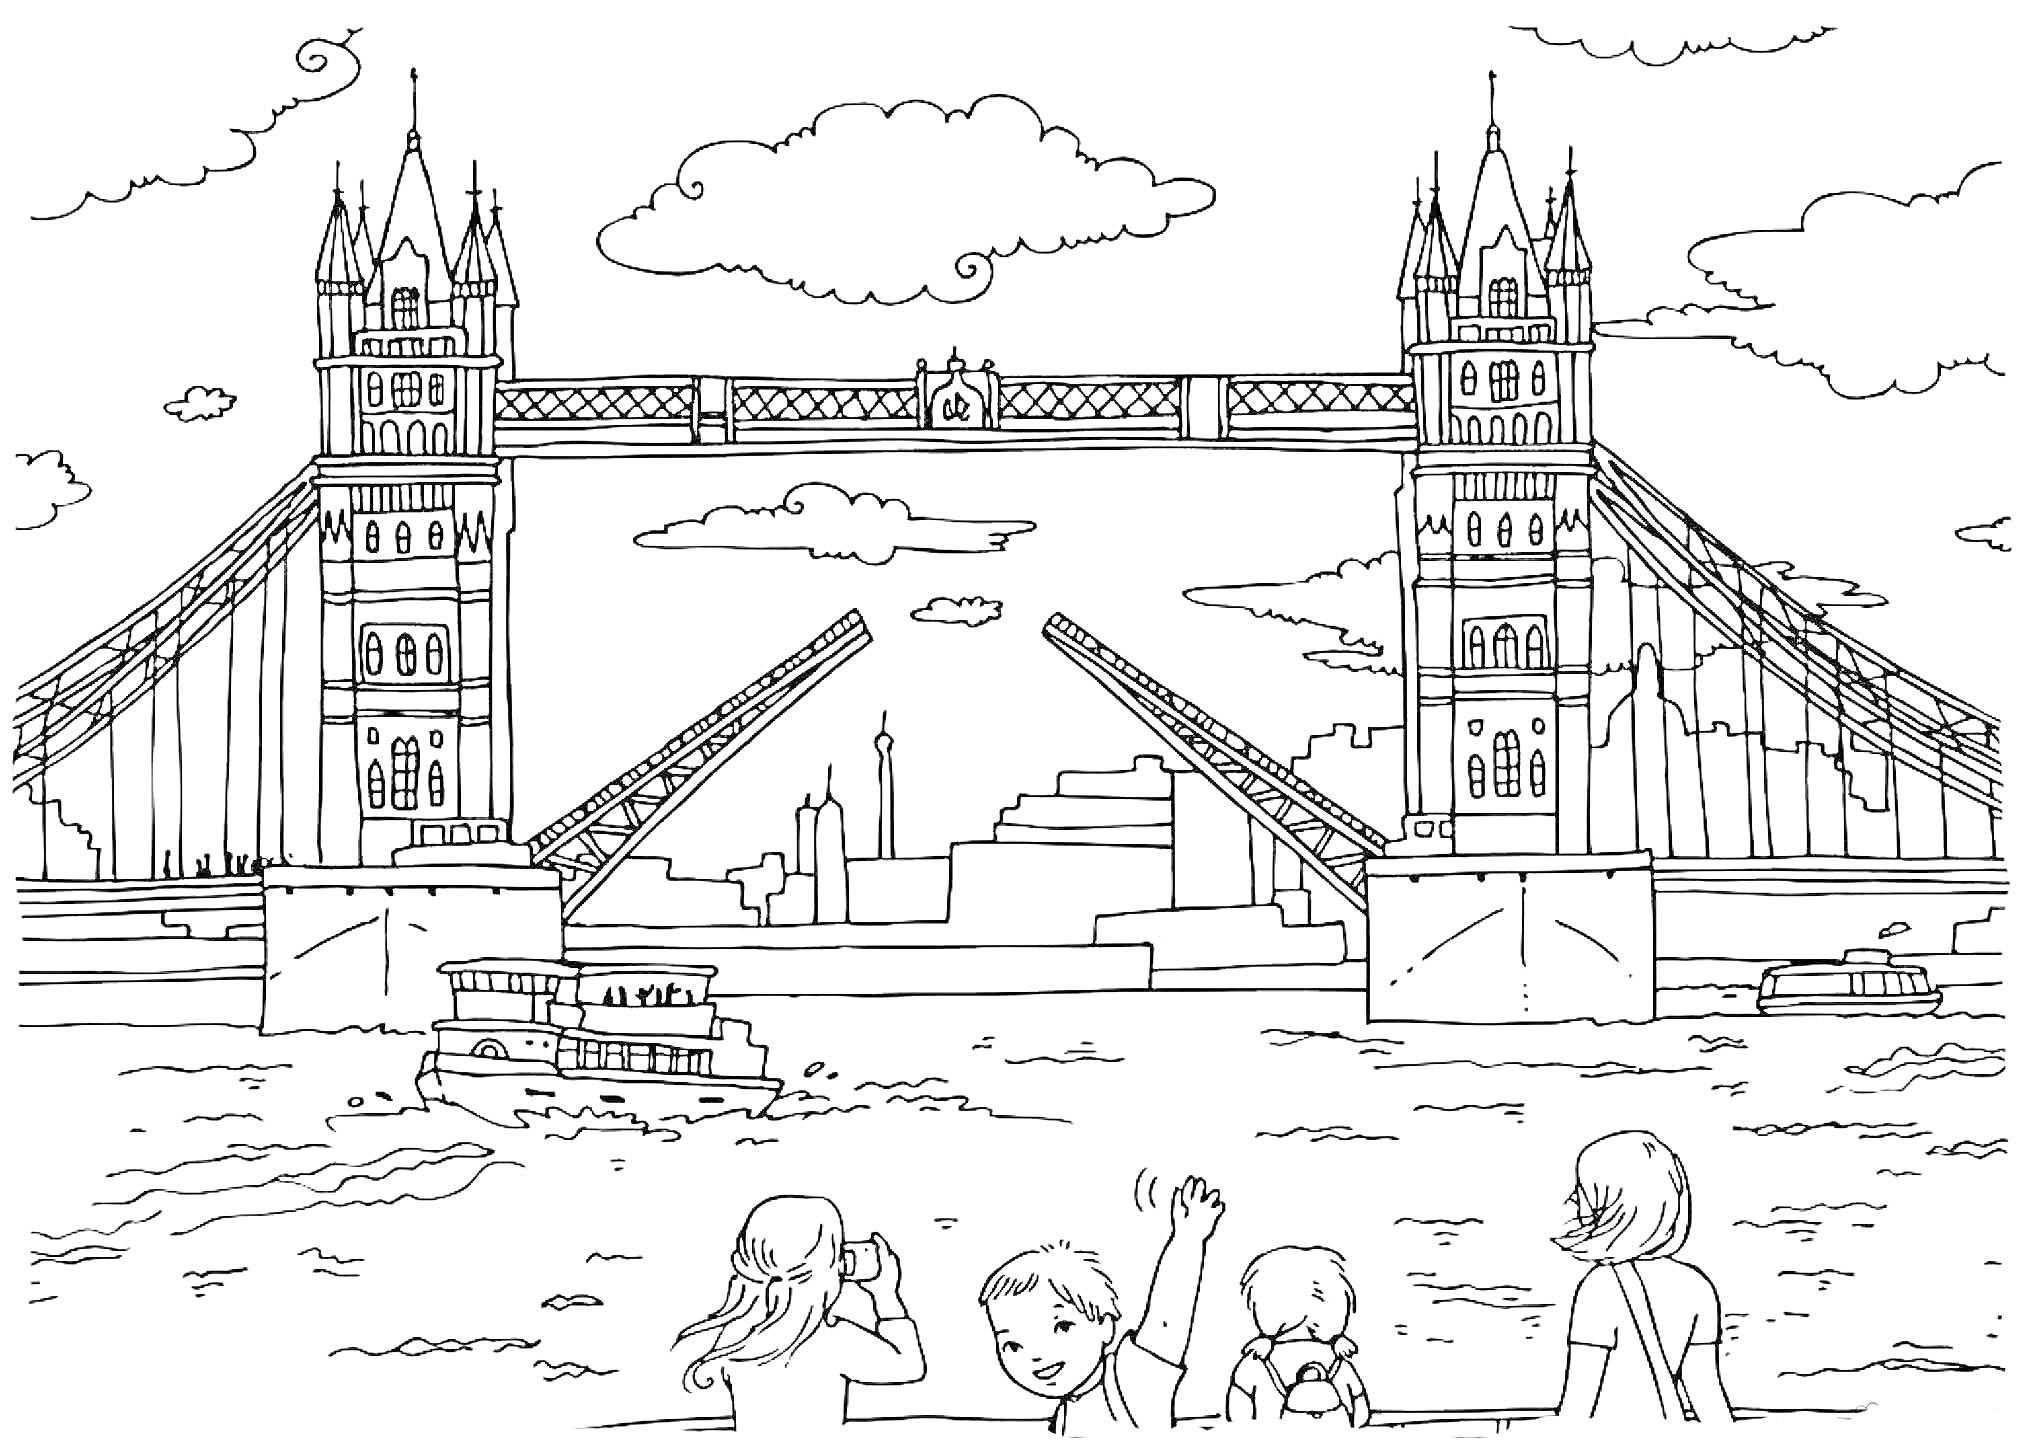 Тауэрский мост с поднятыми пролётами, лодка на реке Темза и люди на набережной, Лондон